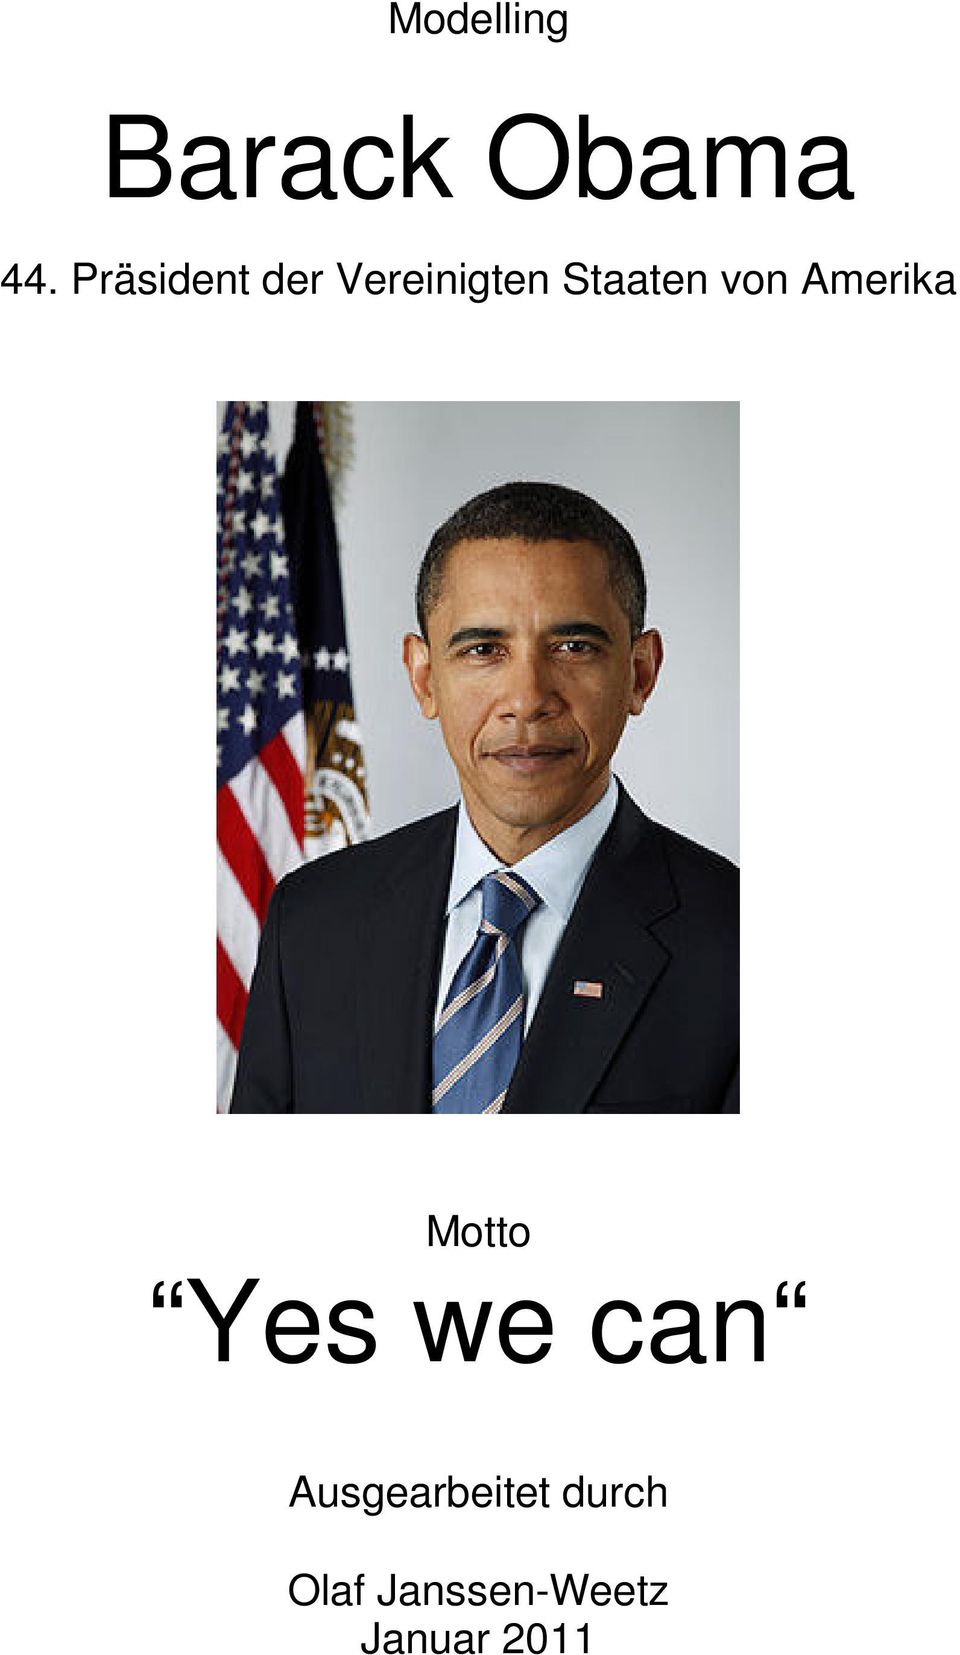 Amerika Abbildung 1 - Barack Obama 2009